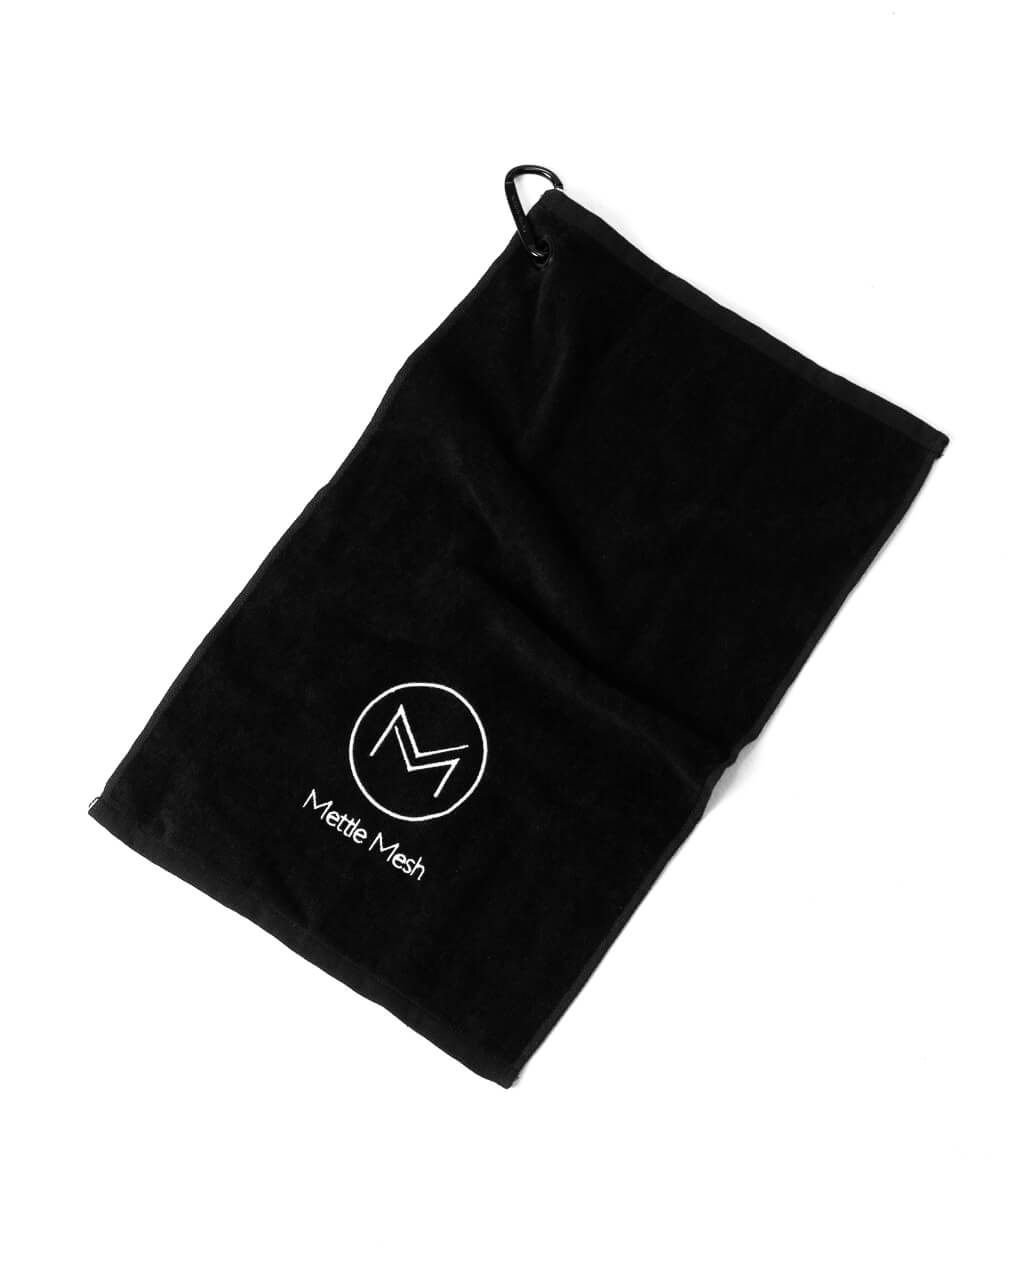 MM Embroidered Gym Towel | Black